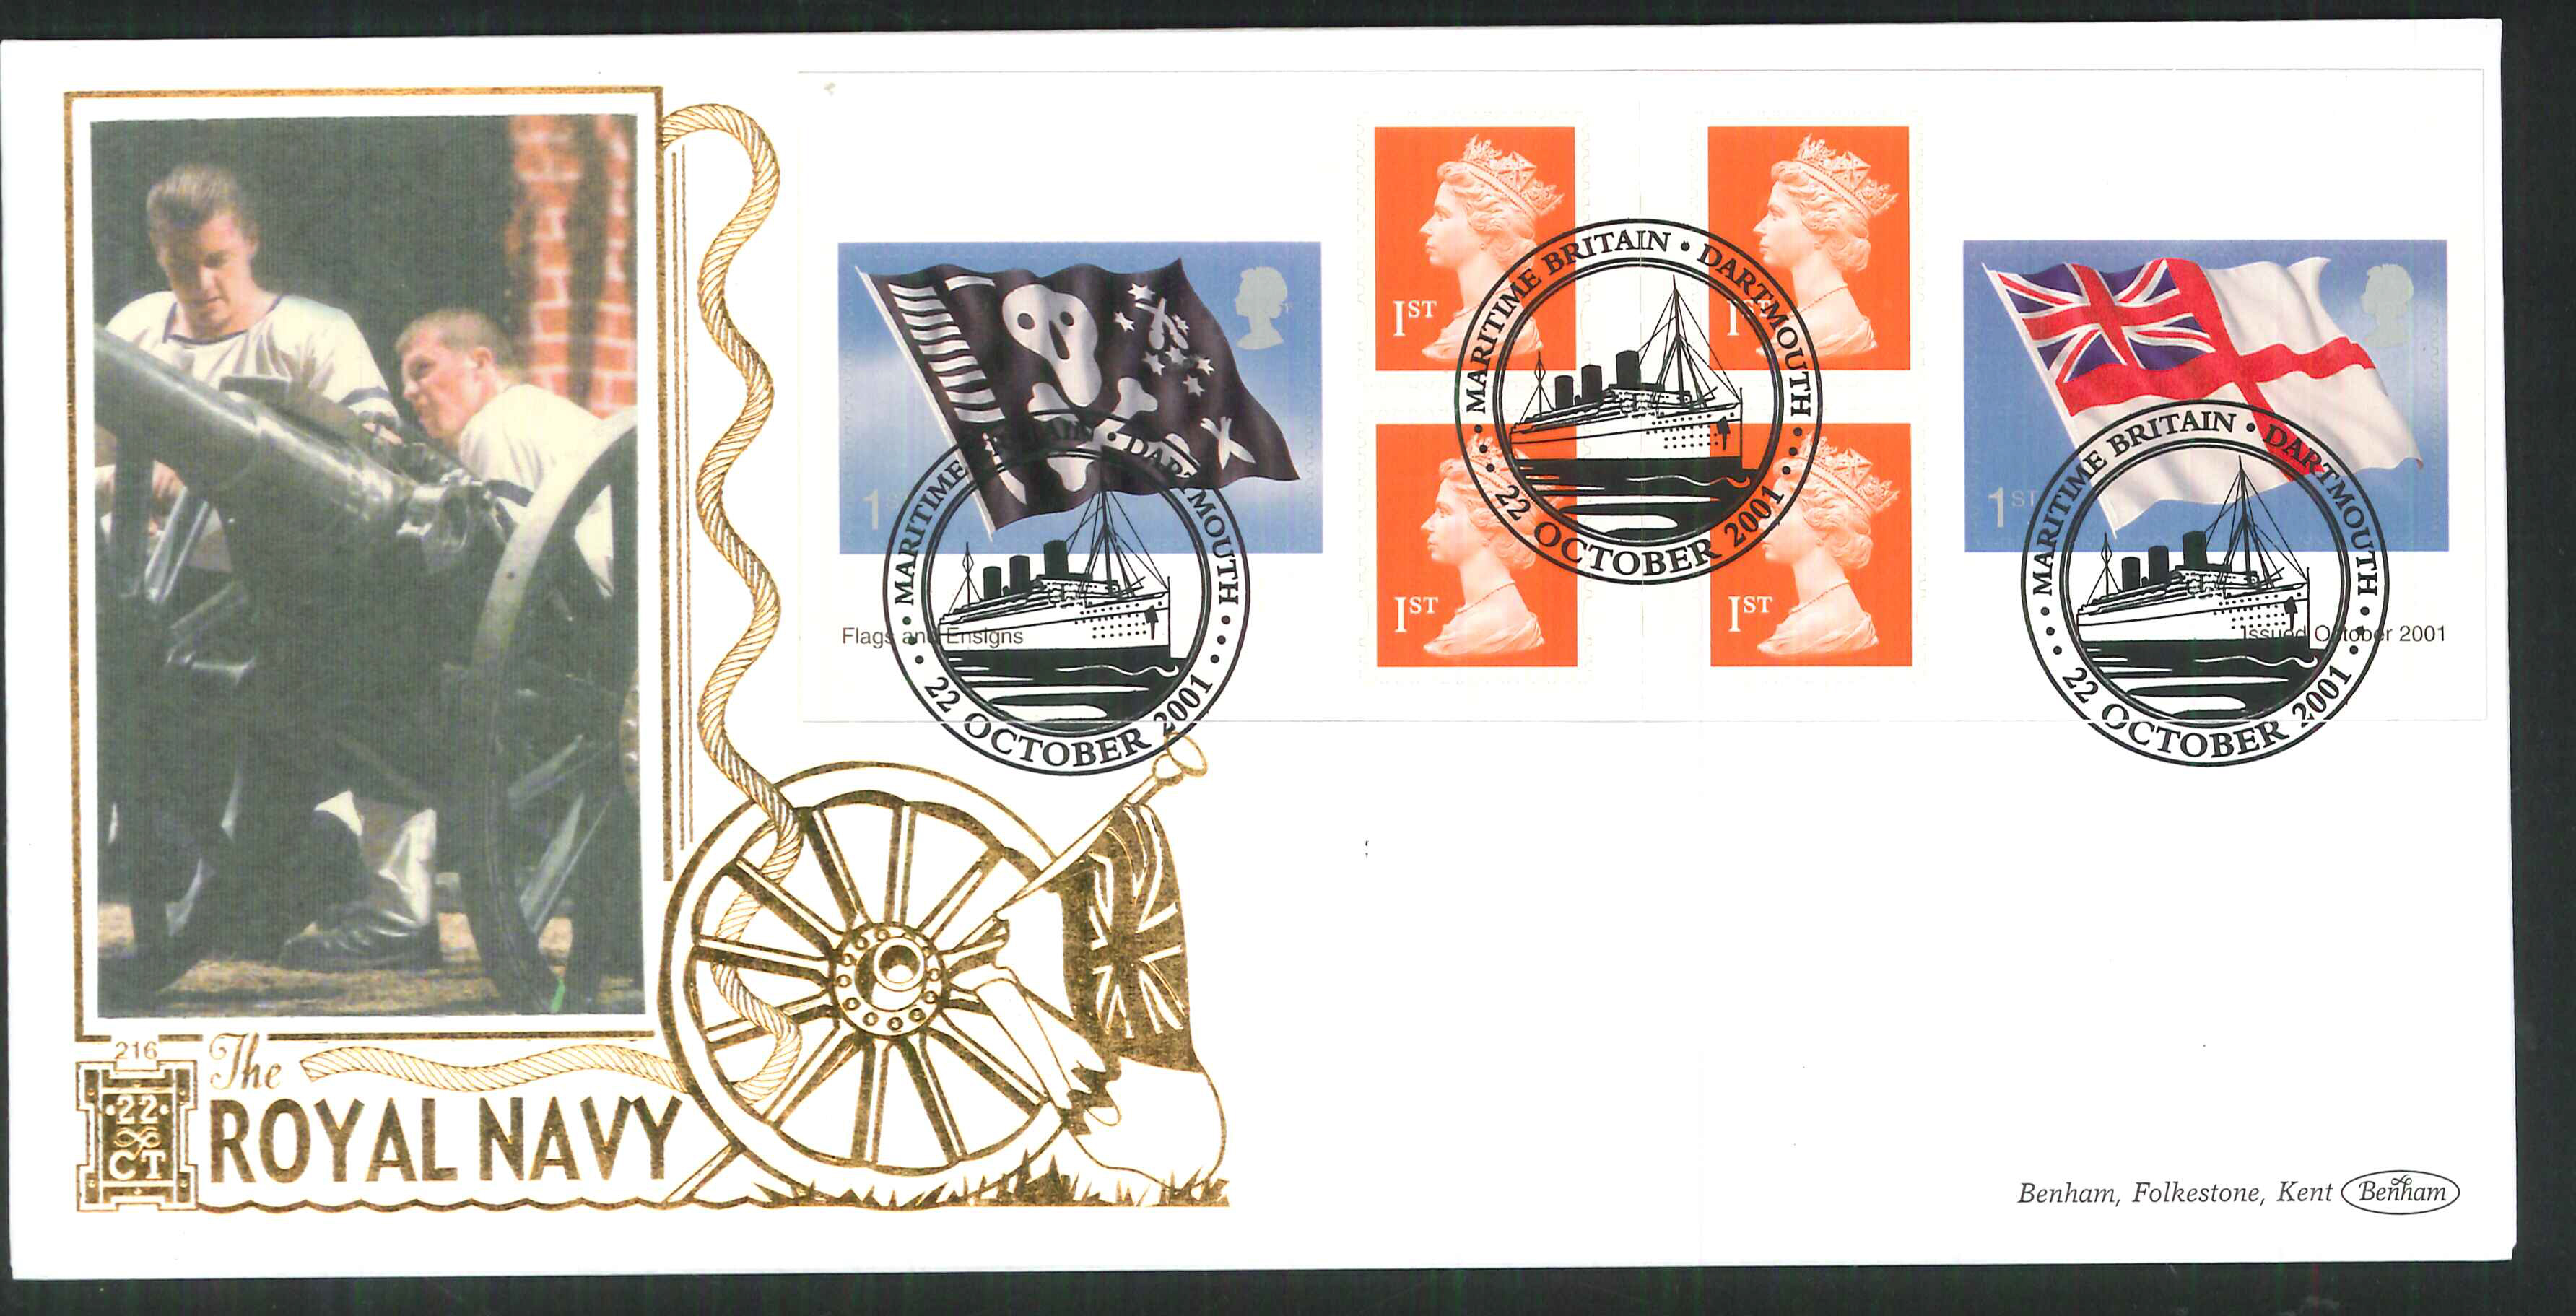 2001 - Flags & Ensigns Retail Book FDC Benham 22ct Gold 500 - Dartmouth Postmark